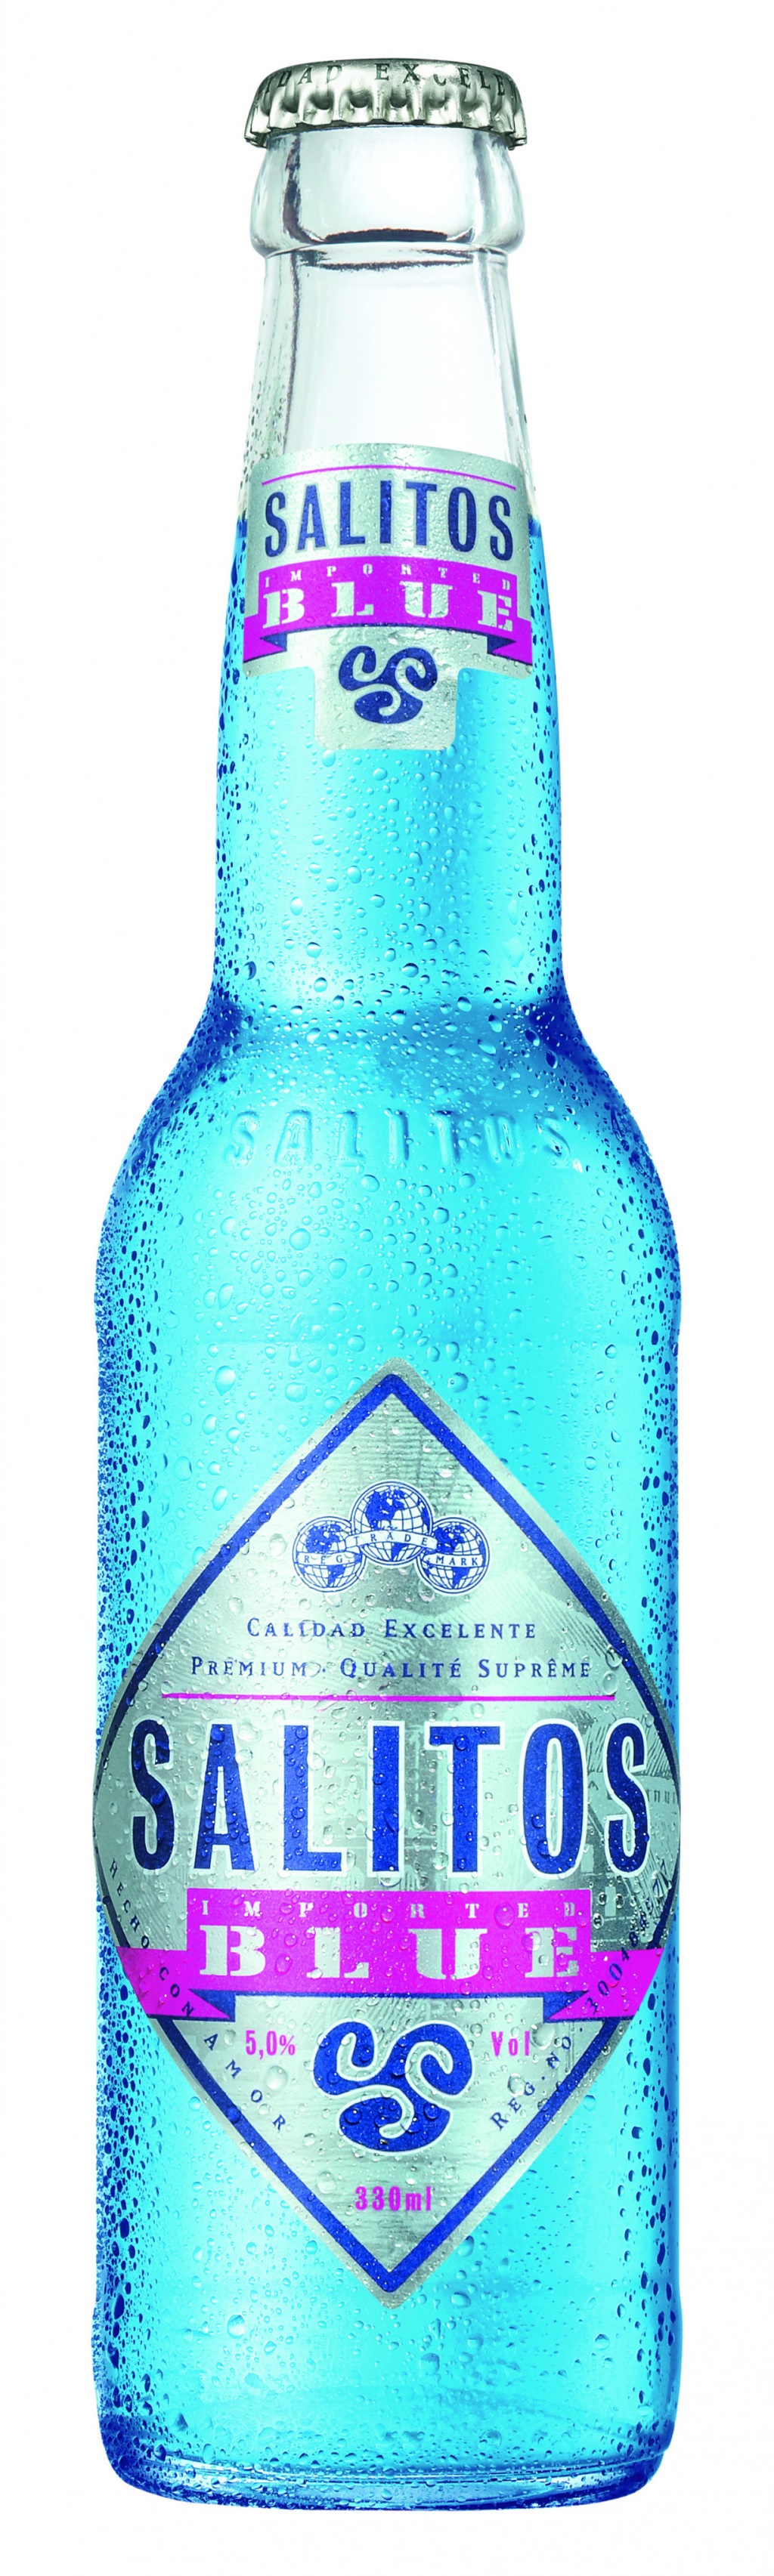 77209 Salitos blue beer 4x6x33 cl